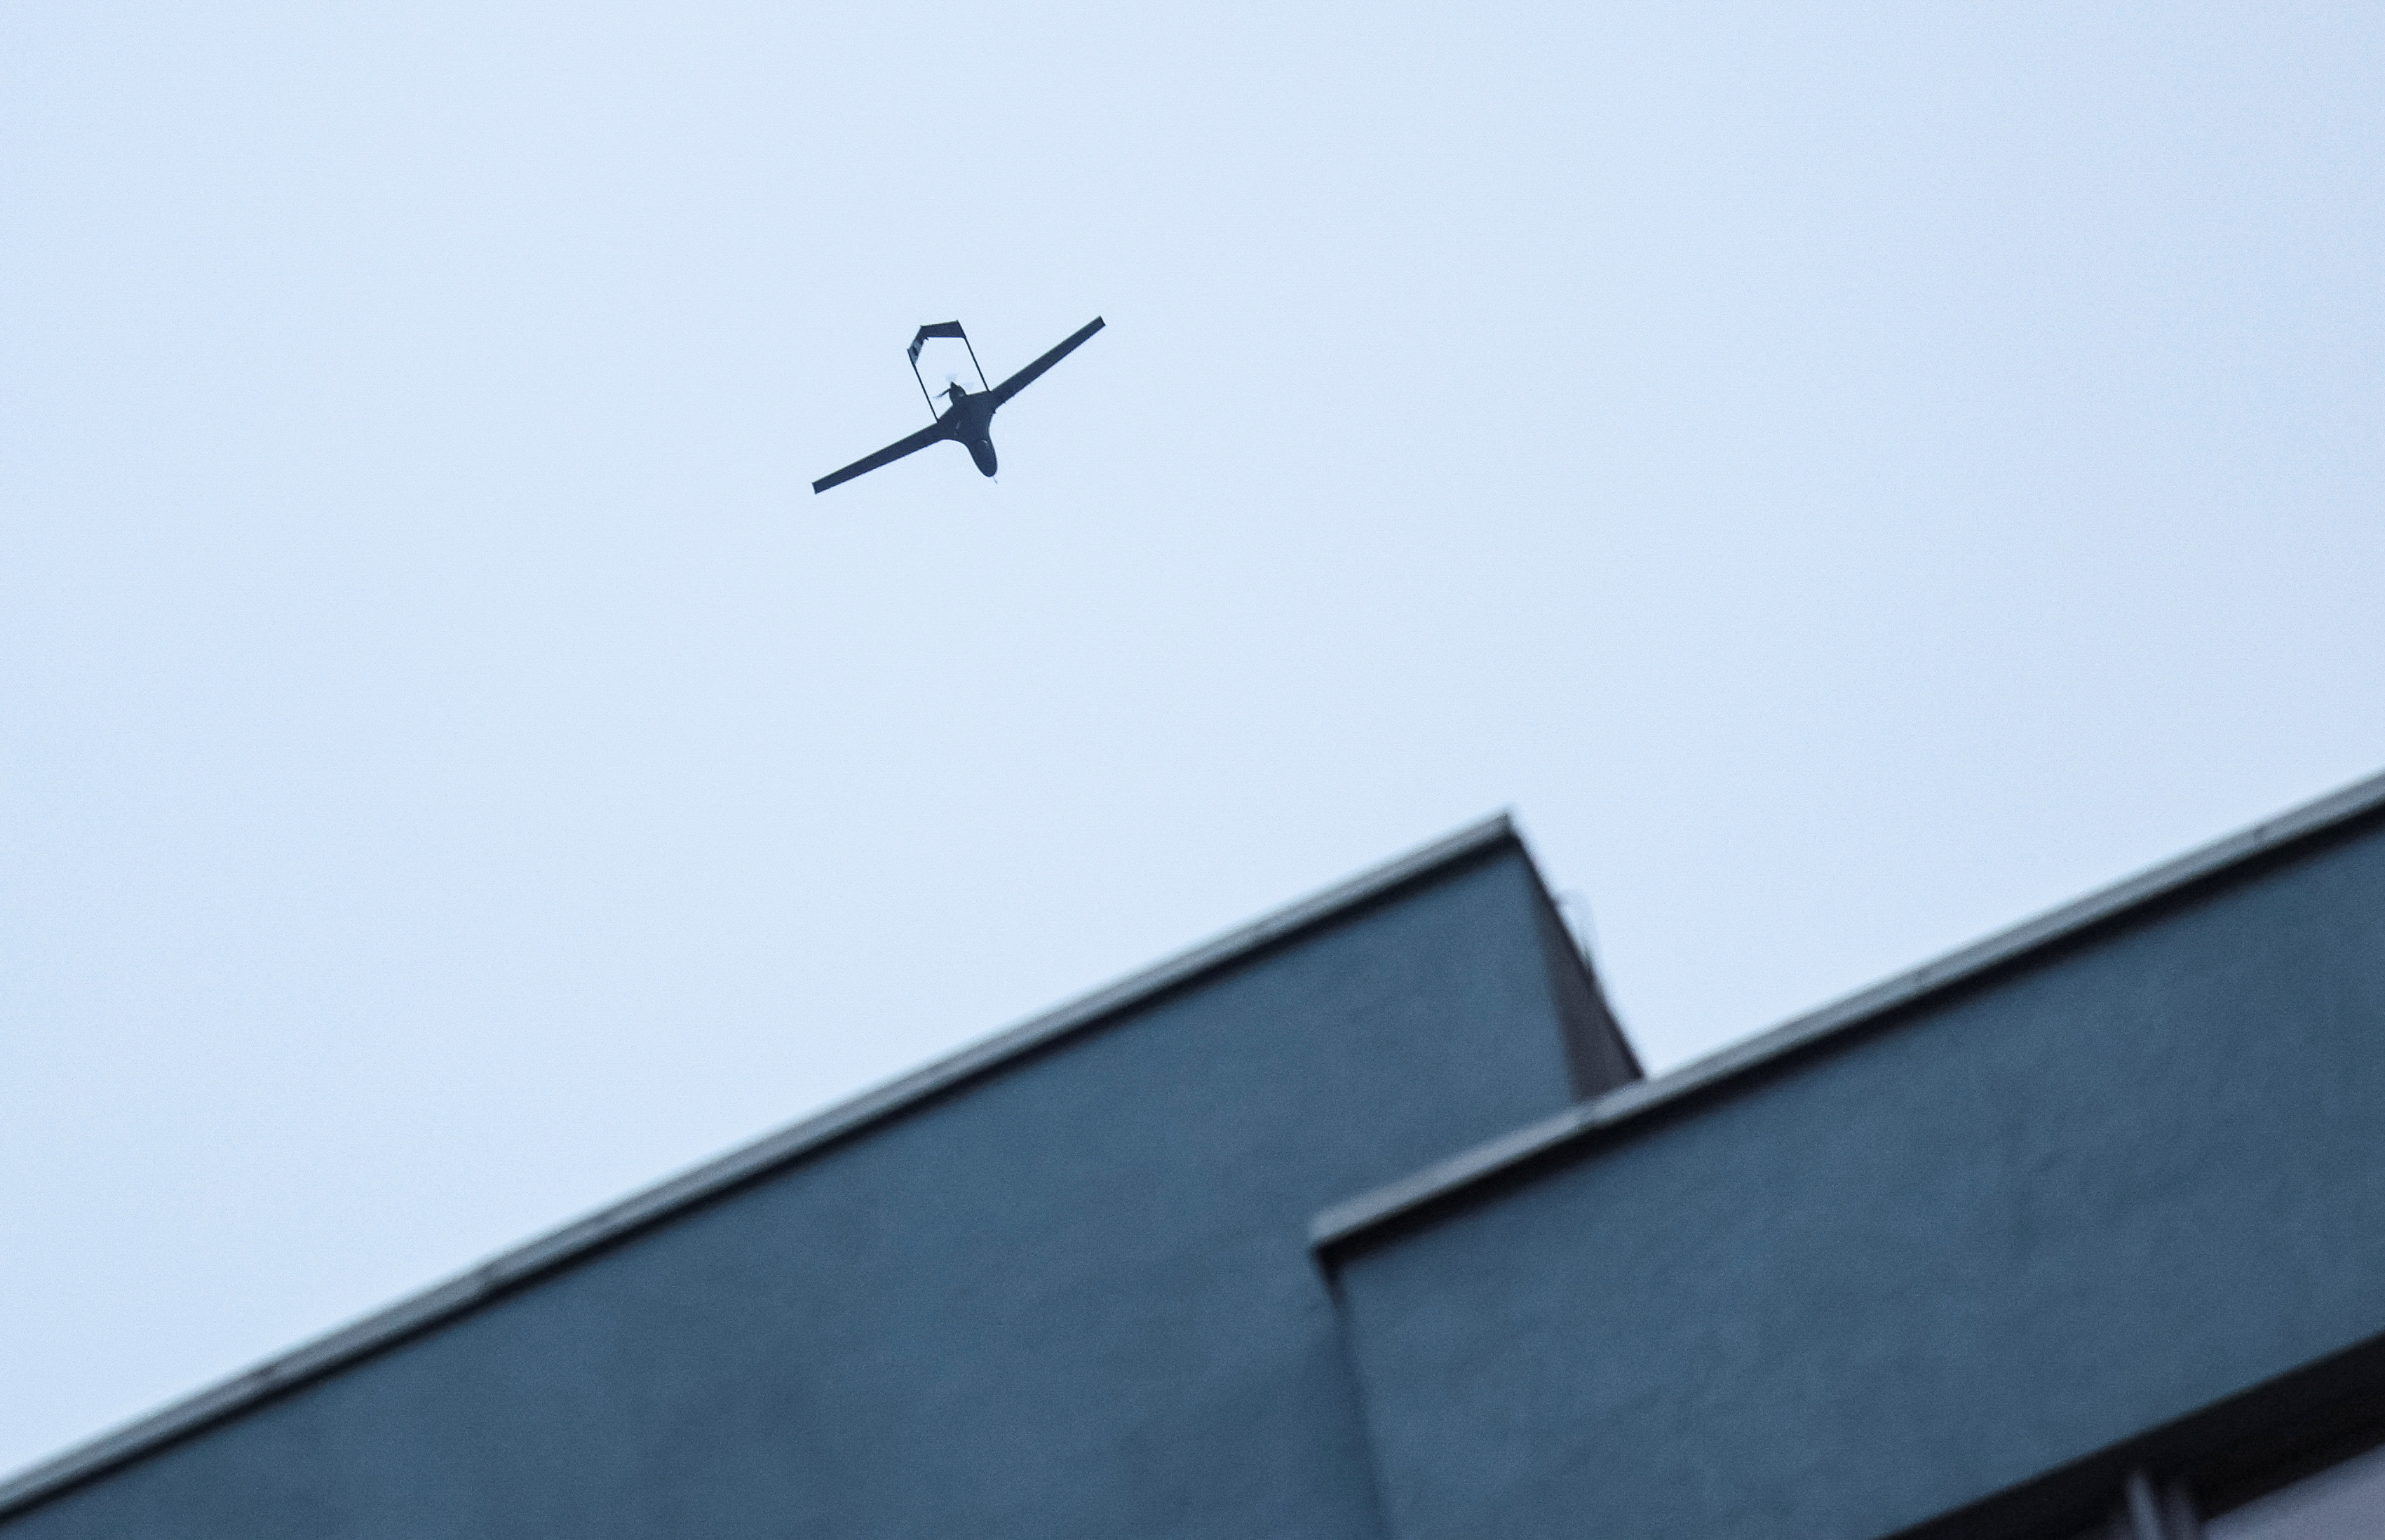 Russia's war on Ukraine latest: Russian drones attack Kyiv again | Reuters